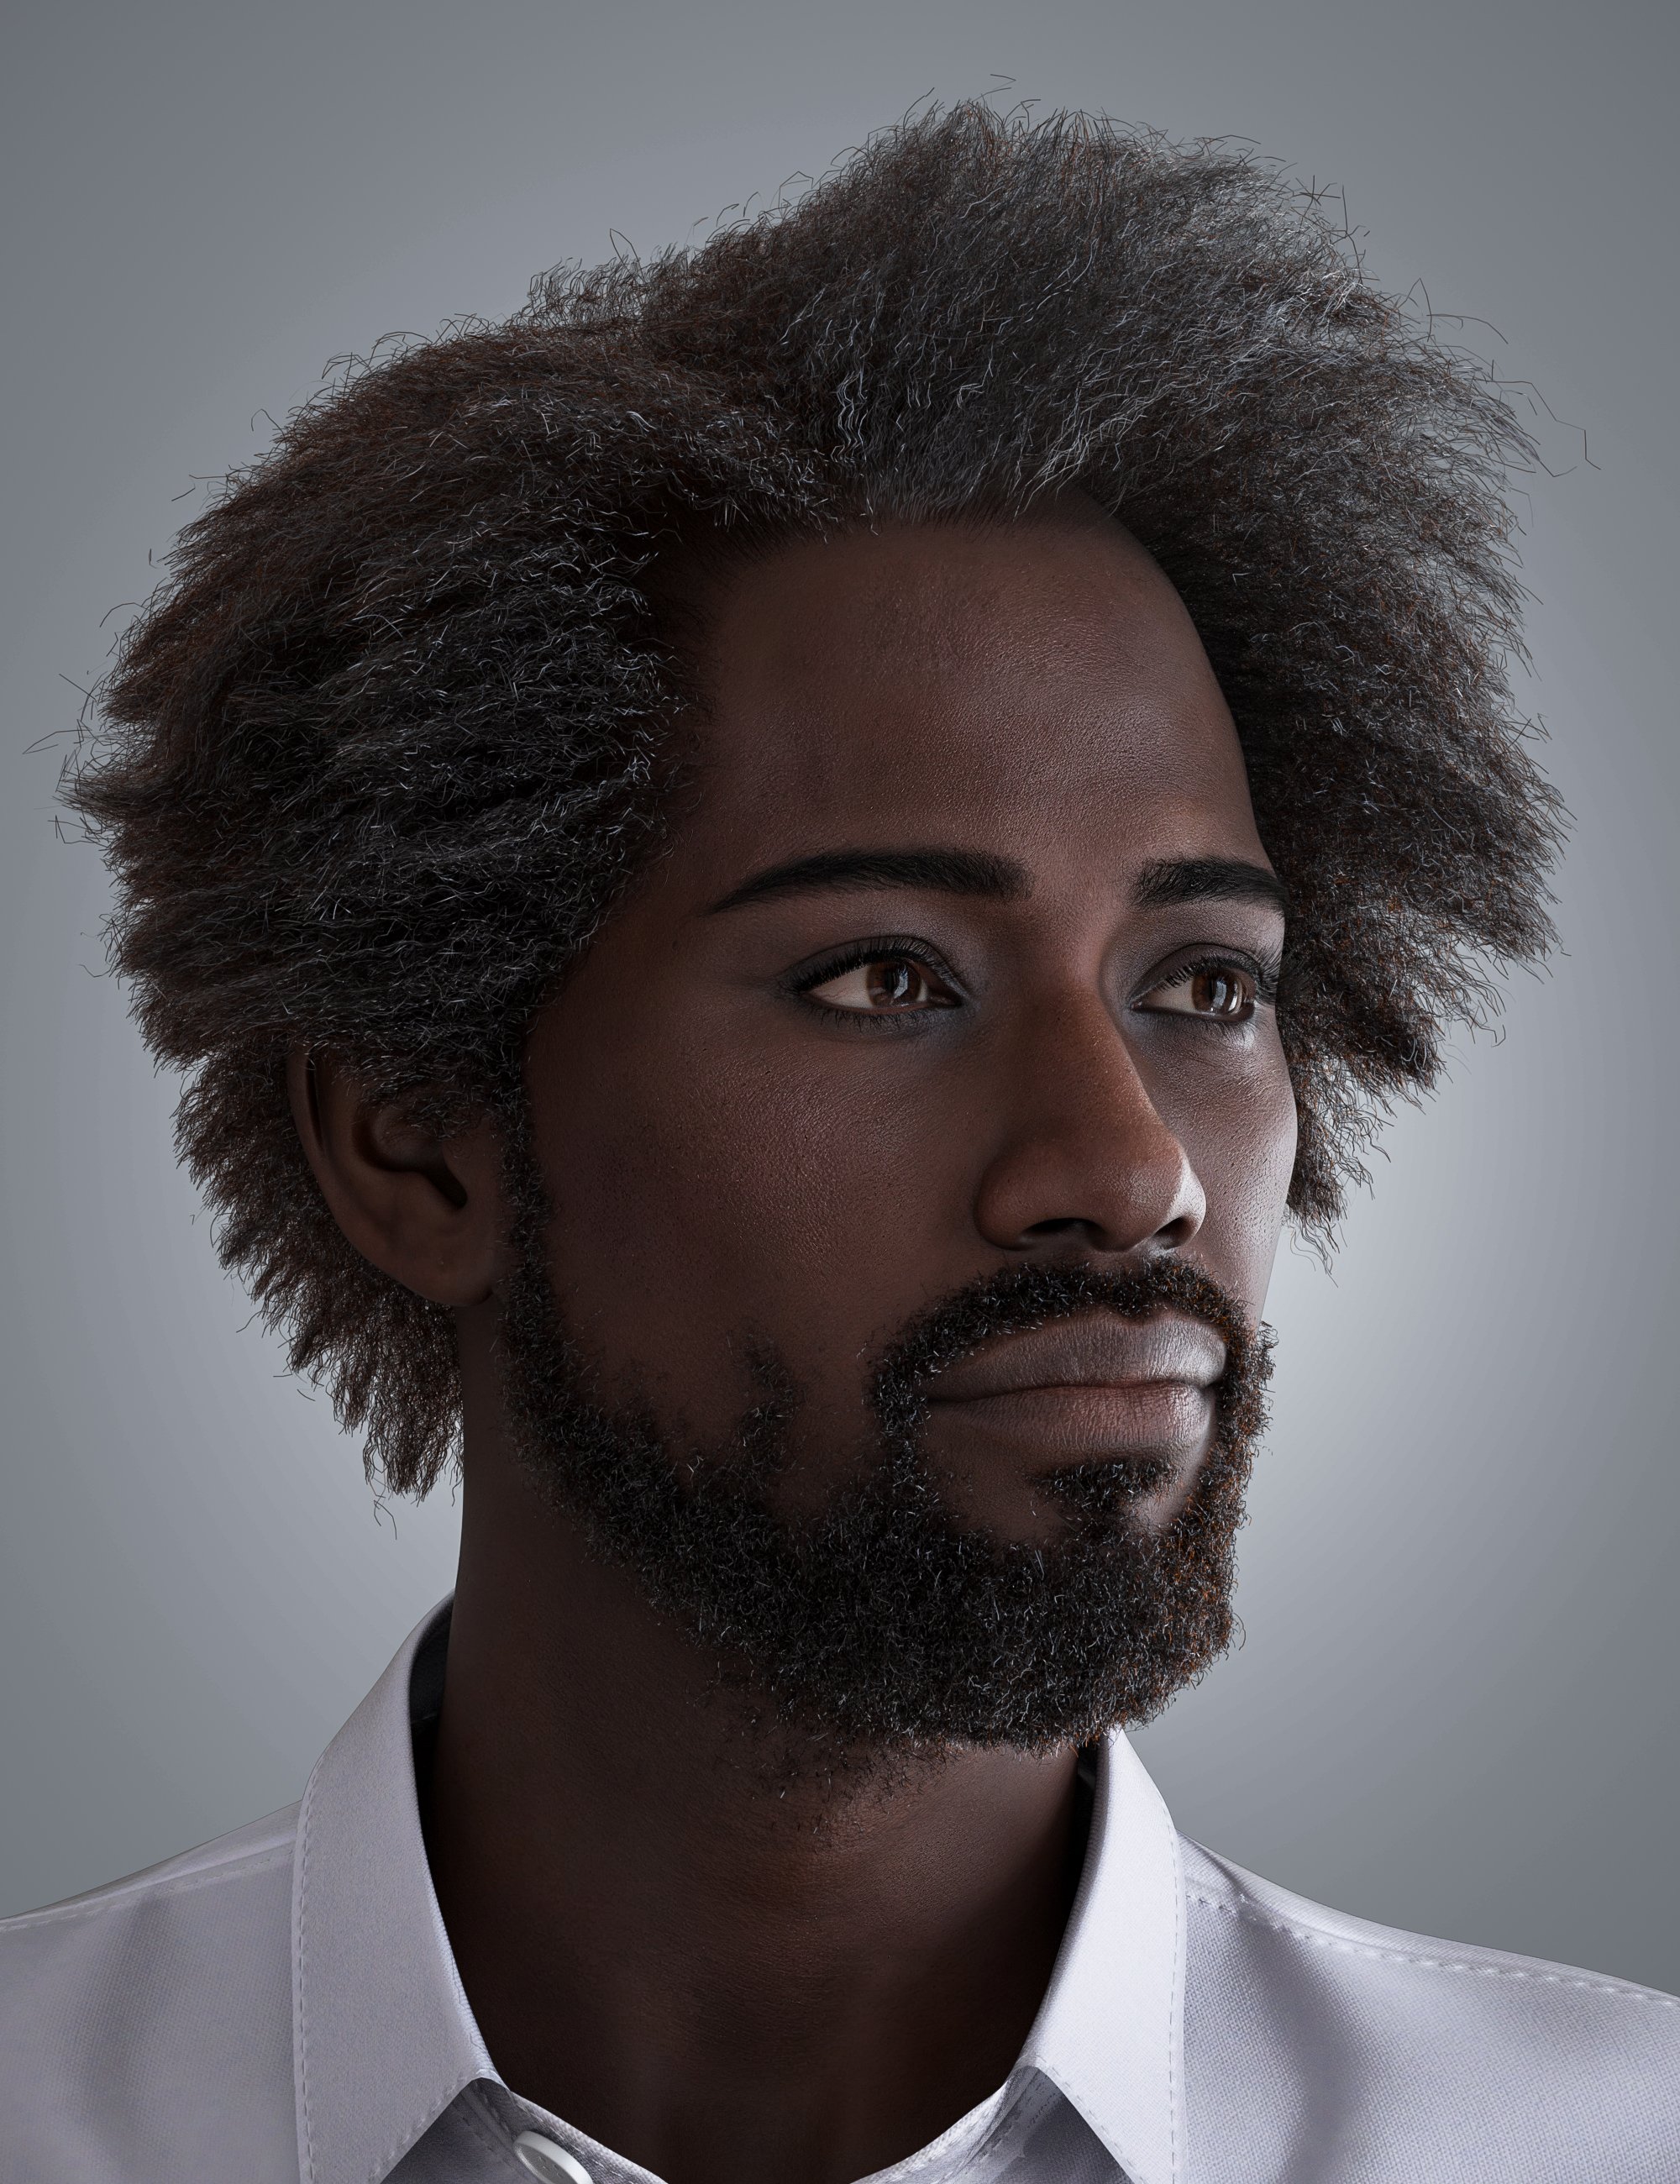 HS Mandeep Frizz Hair and Beard for Genesis 9 by: Hair Studio, 3D Models by Daz 3D